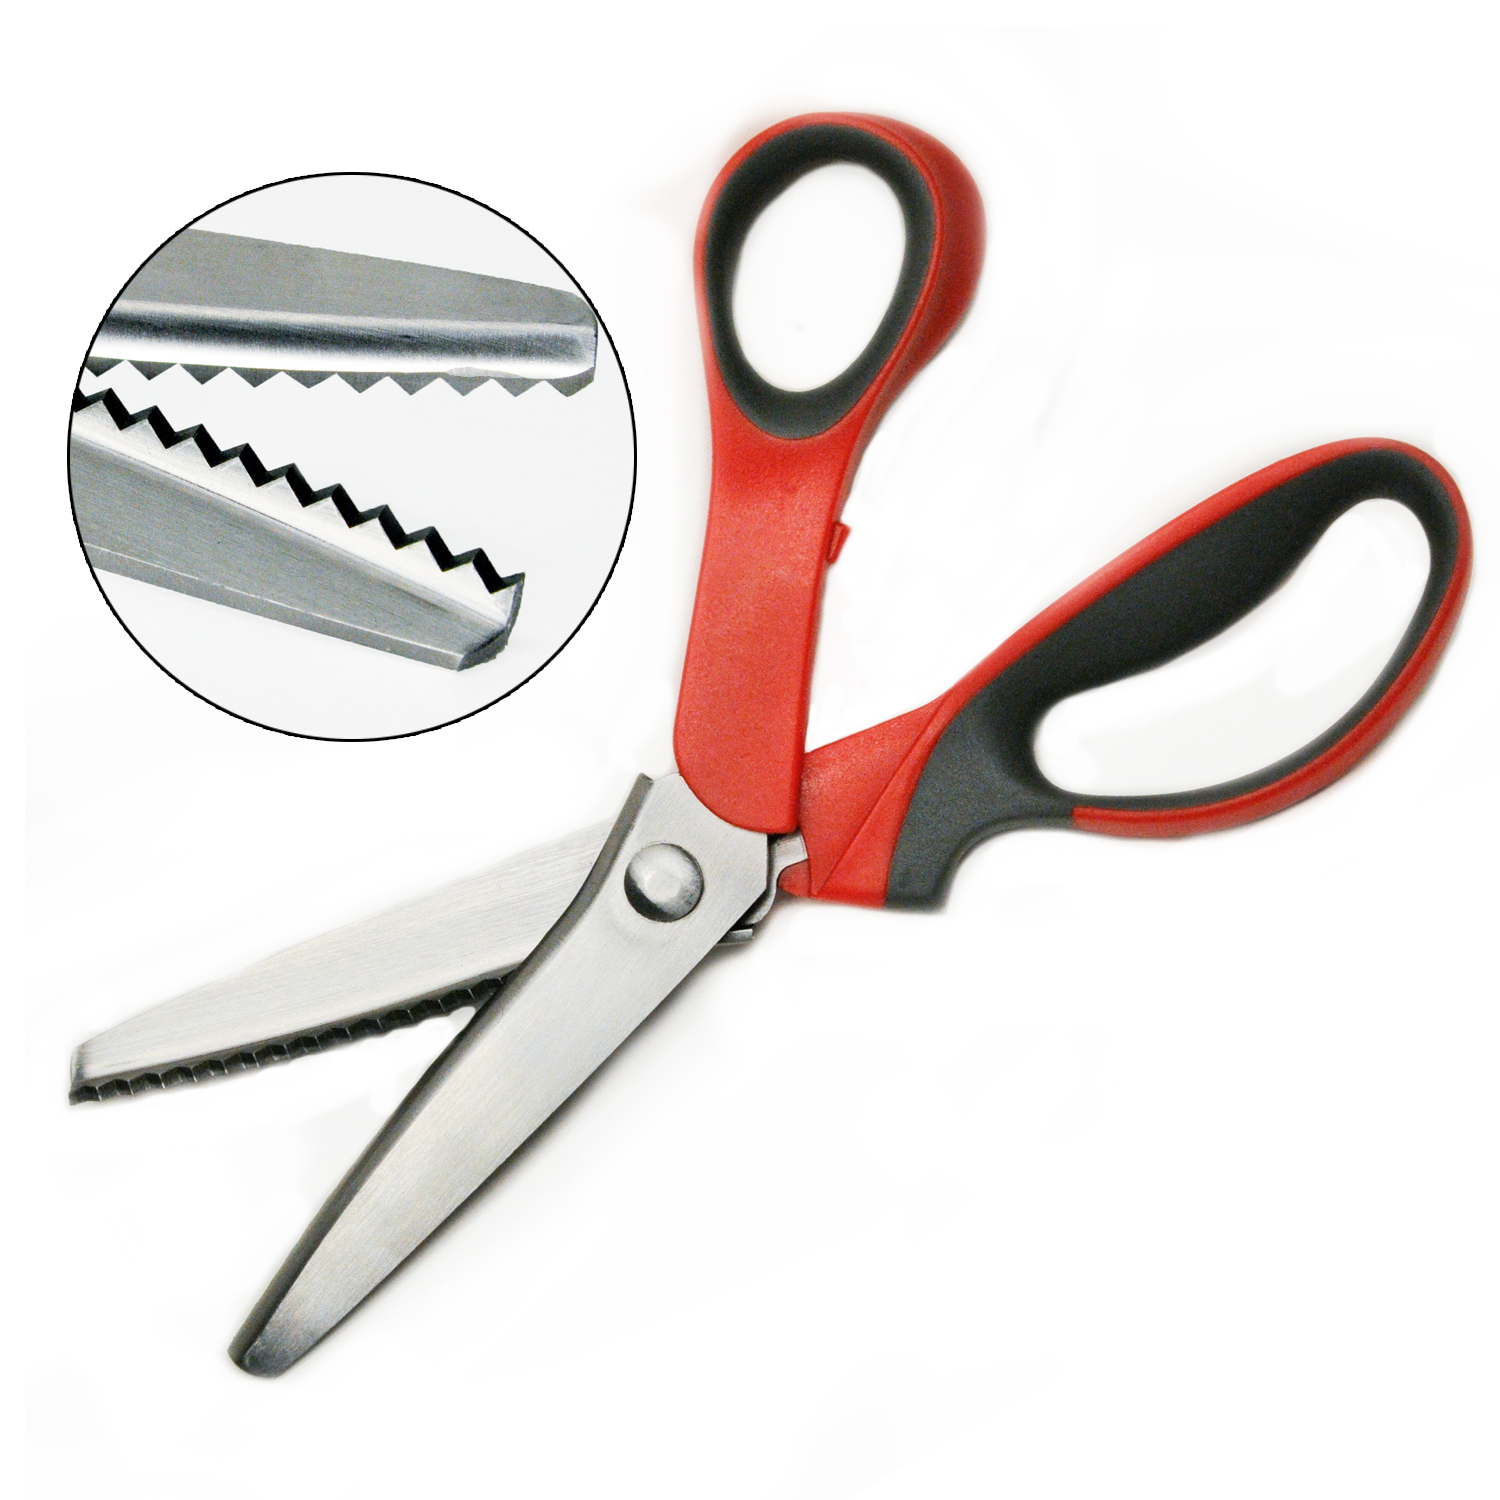 Pinking Shears Bulk - Fabric Scissors with zig-zag pattern